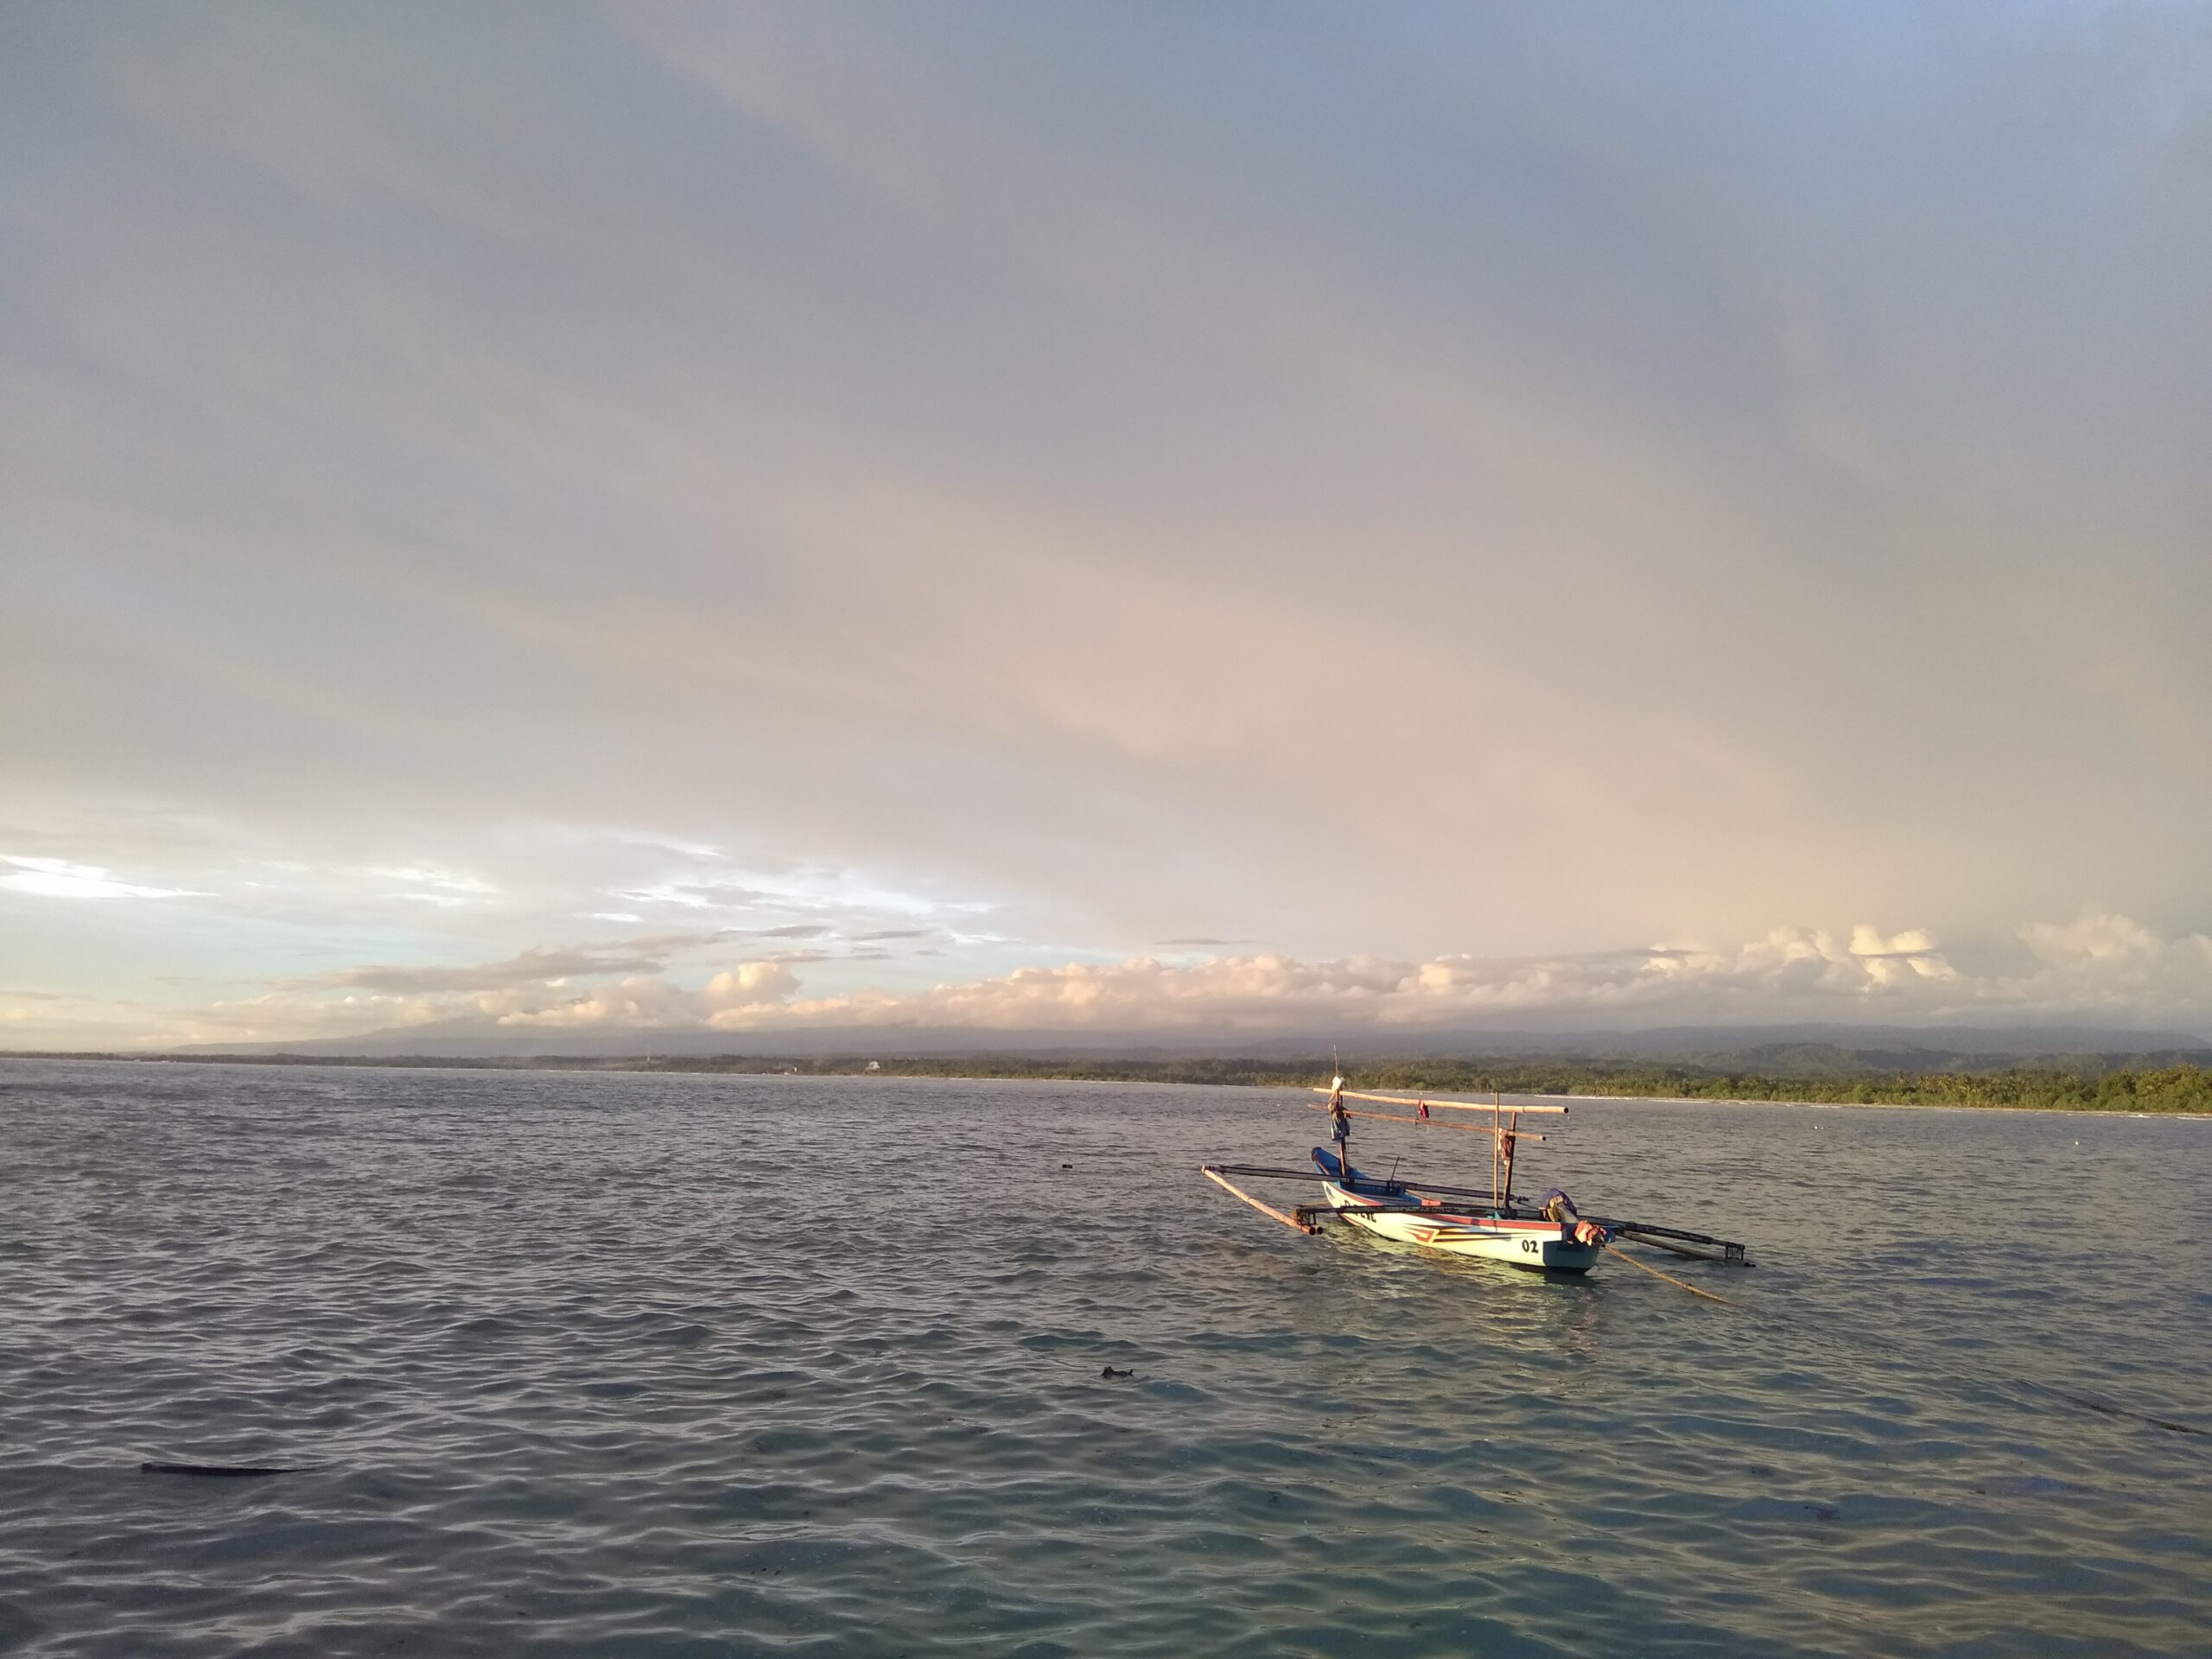 Daya Tarik Obyek Wisata Pantai Tanjung Setia di Lampung Barat Lampung